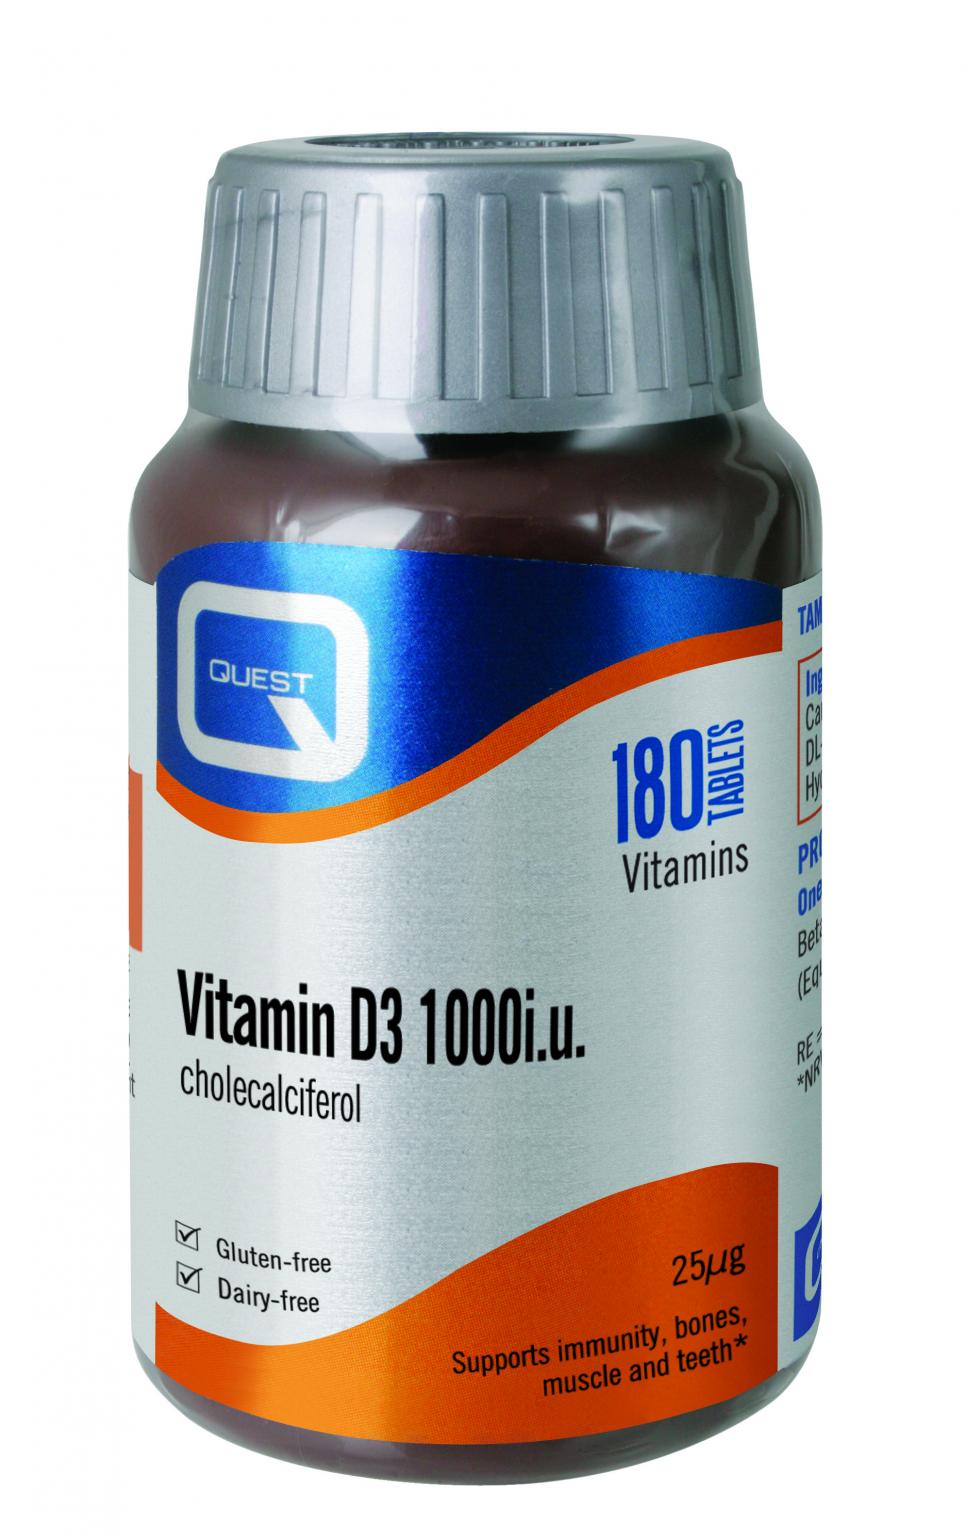 Vitamin D3 1000iu Cholecalciferol 180's